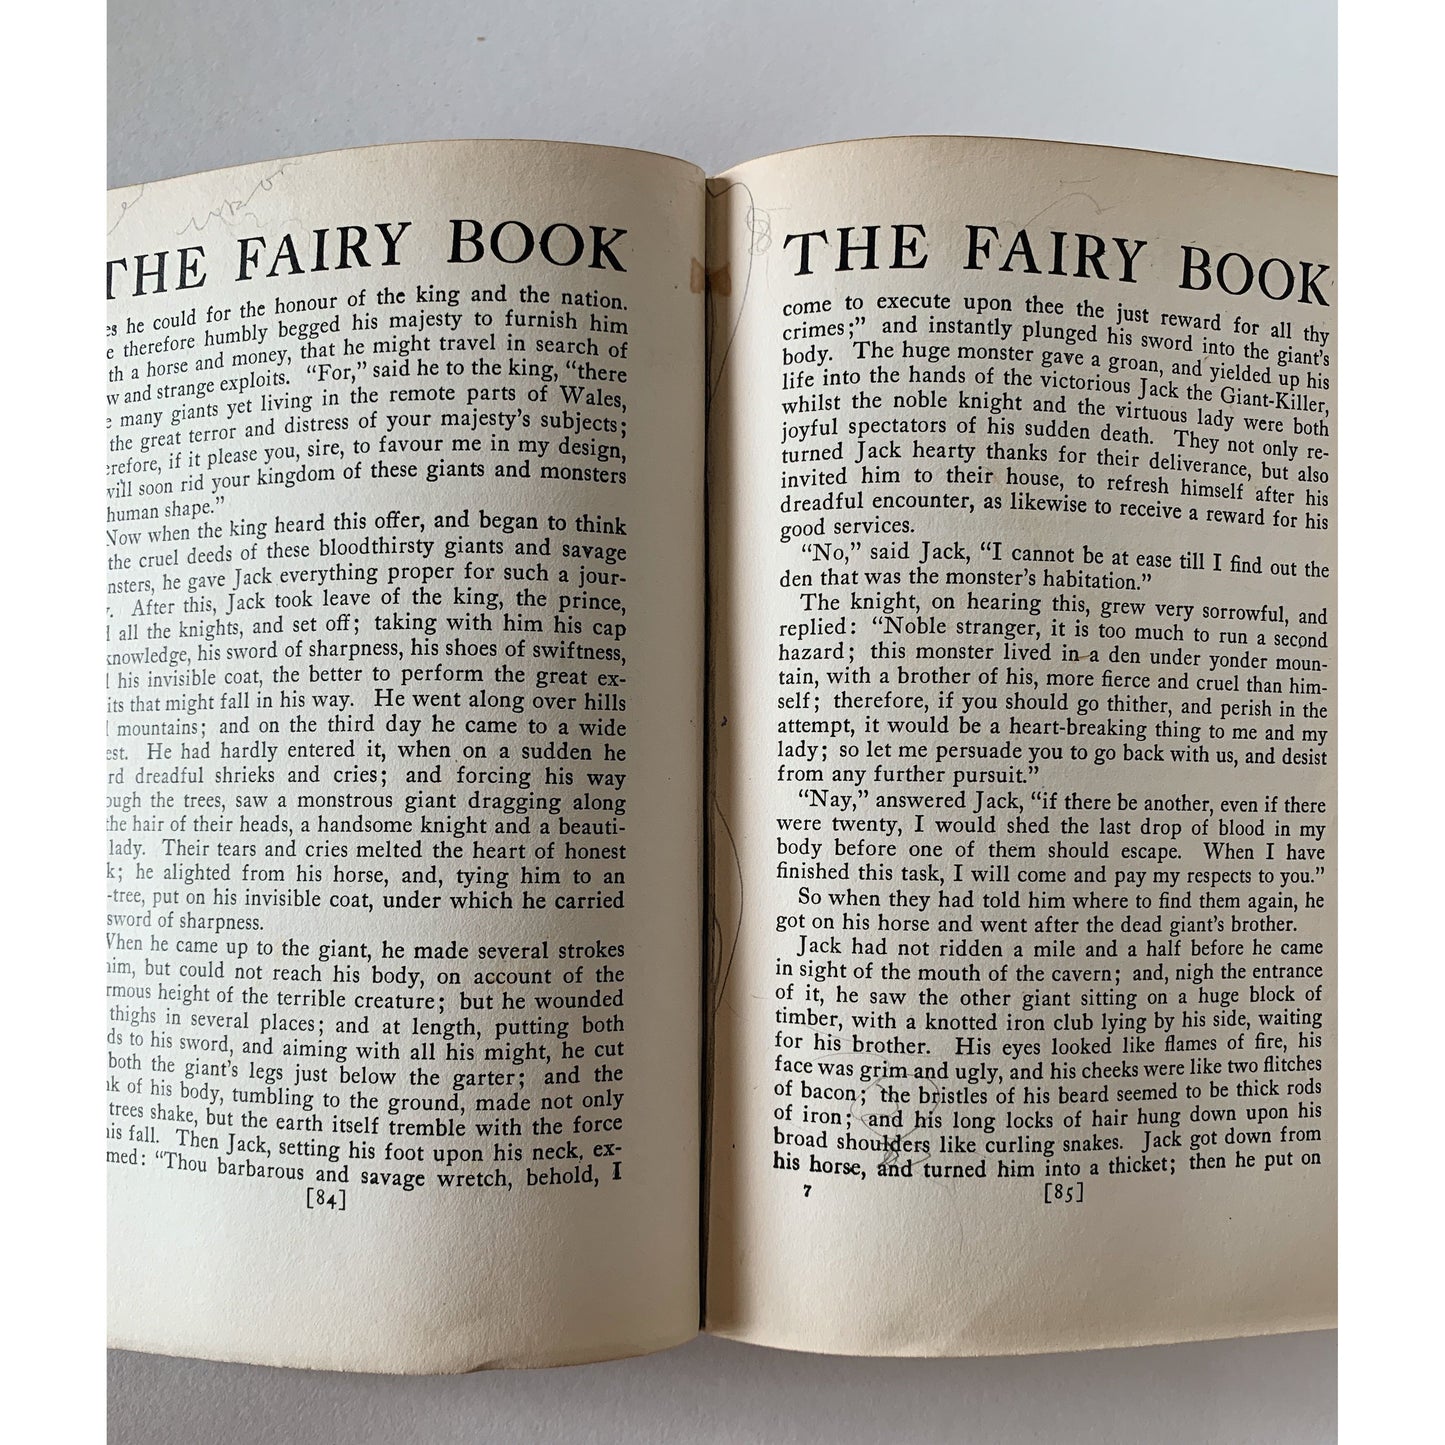 The Fairy Book - Dinah Maria Mulock - Illustrated Hardcover Fairy Tales - 1922